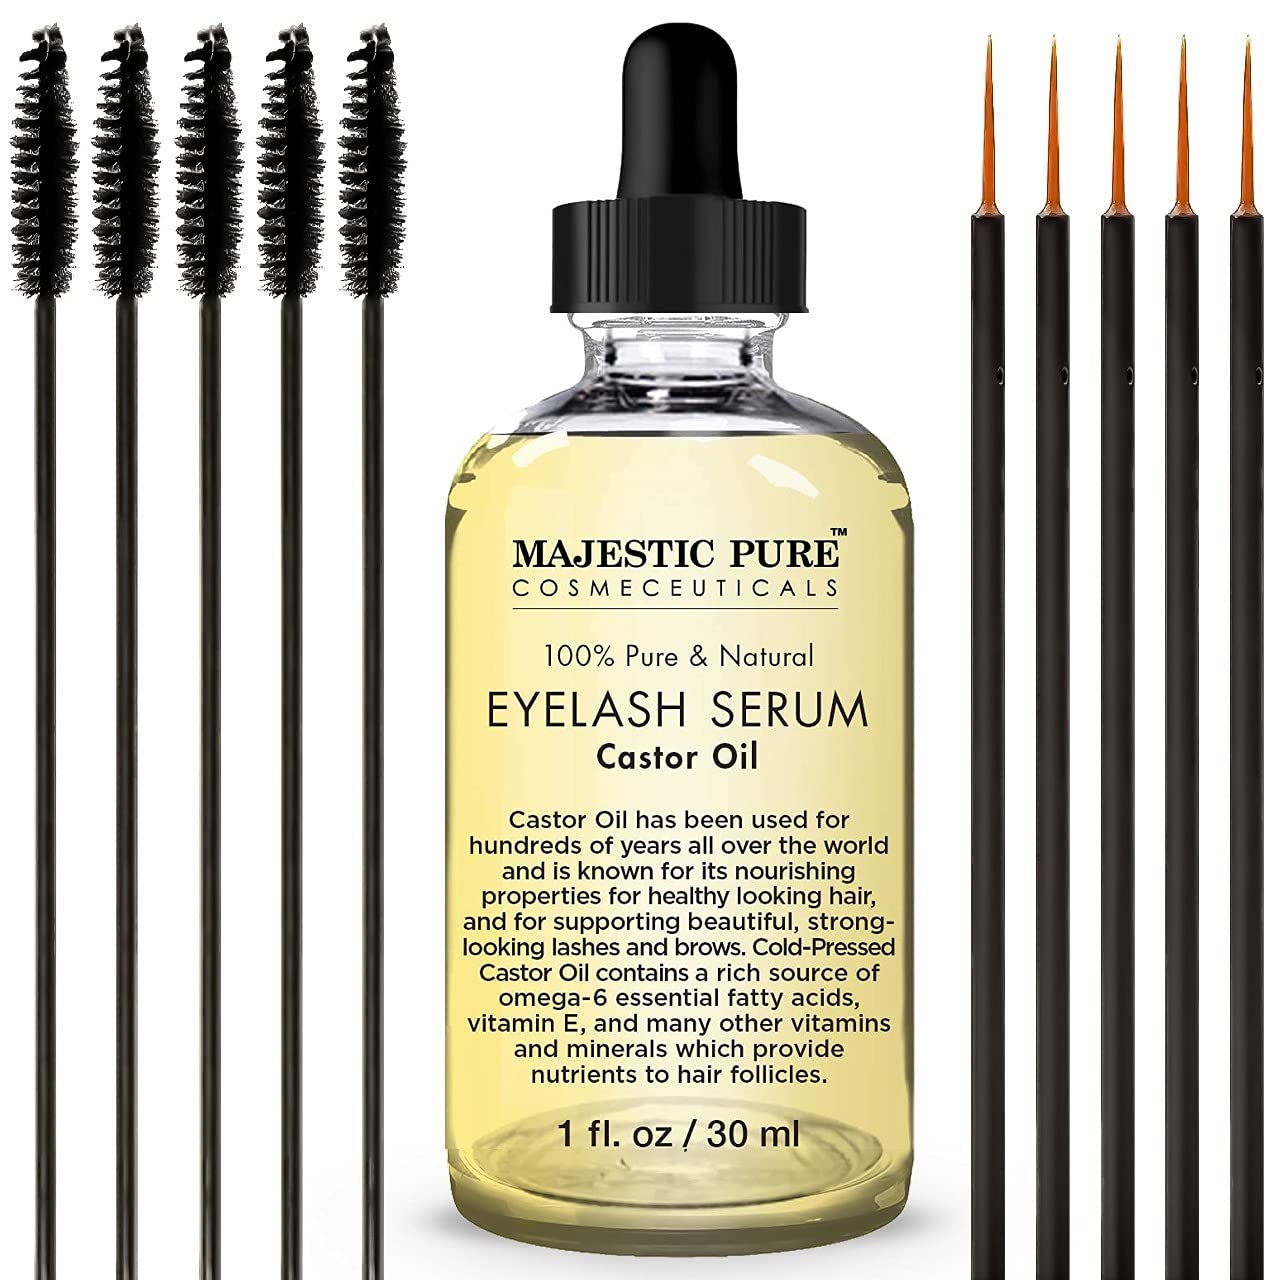 MAJESTIC PURE Castor Oil Eyelash Serum, Pure and Natural, Promotes Natural Eyebrows & Eyelash Growth, Free Set of Mascara Brush and Eyeliner Applicator - 1 fl oz